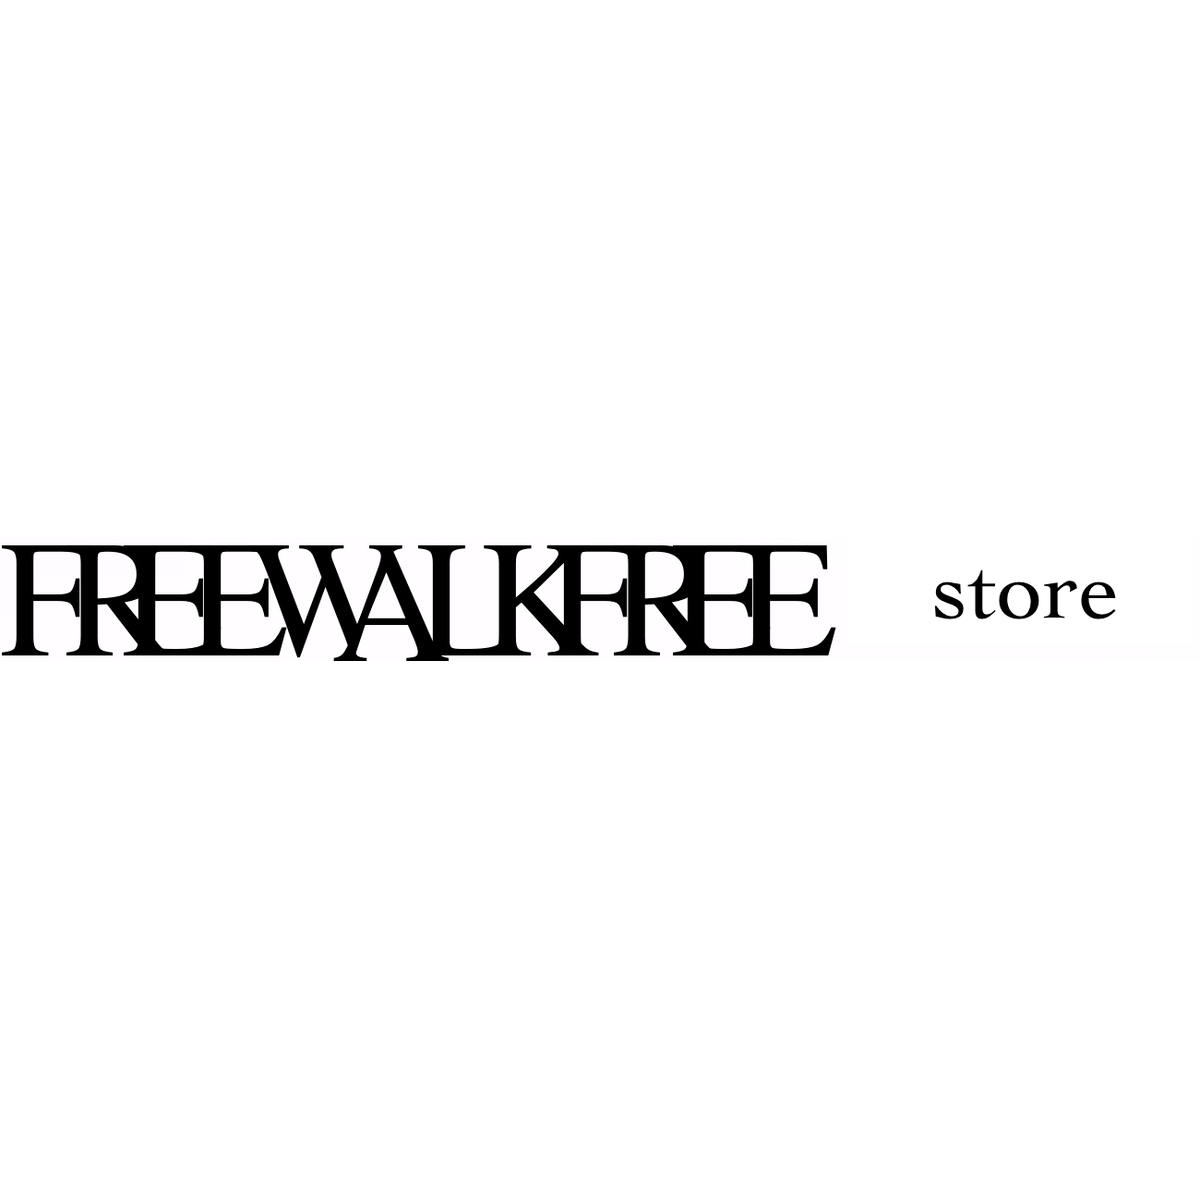 FREE WALK FREE store